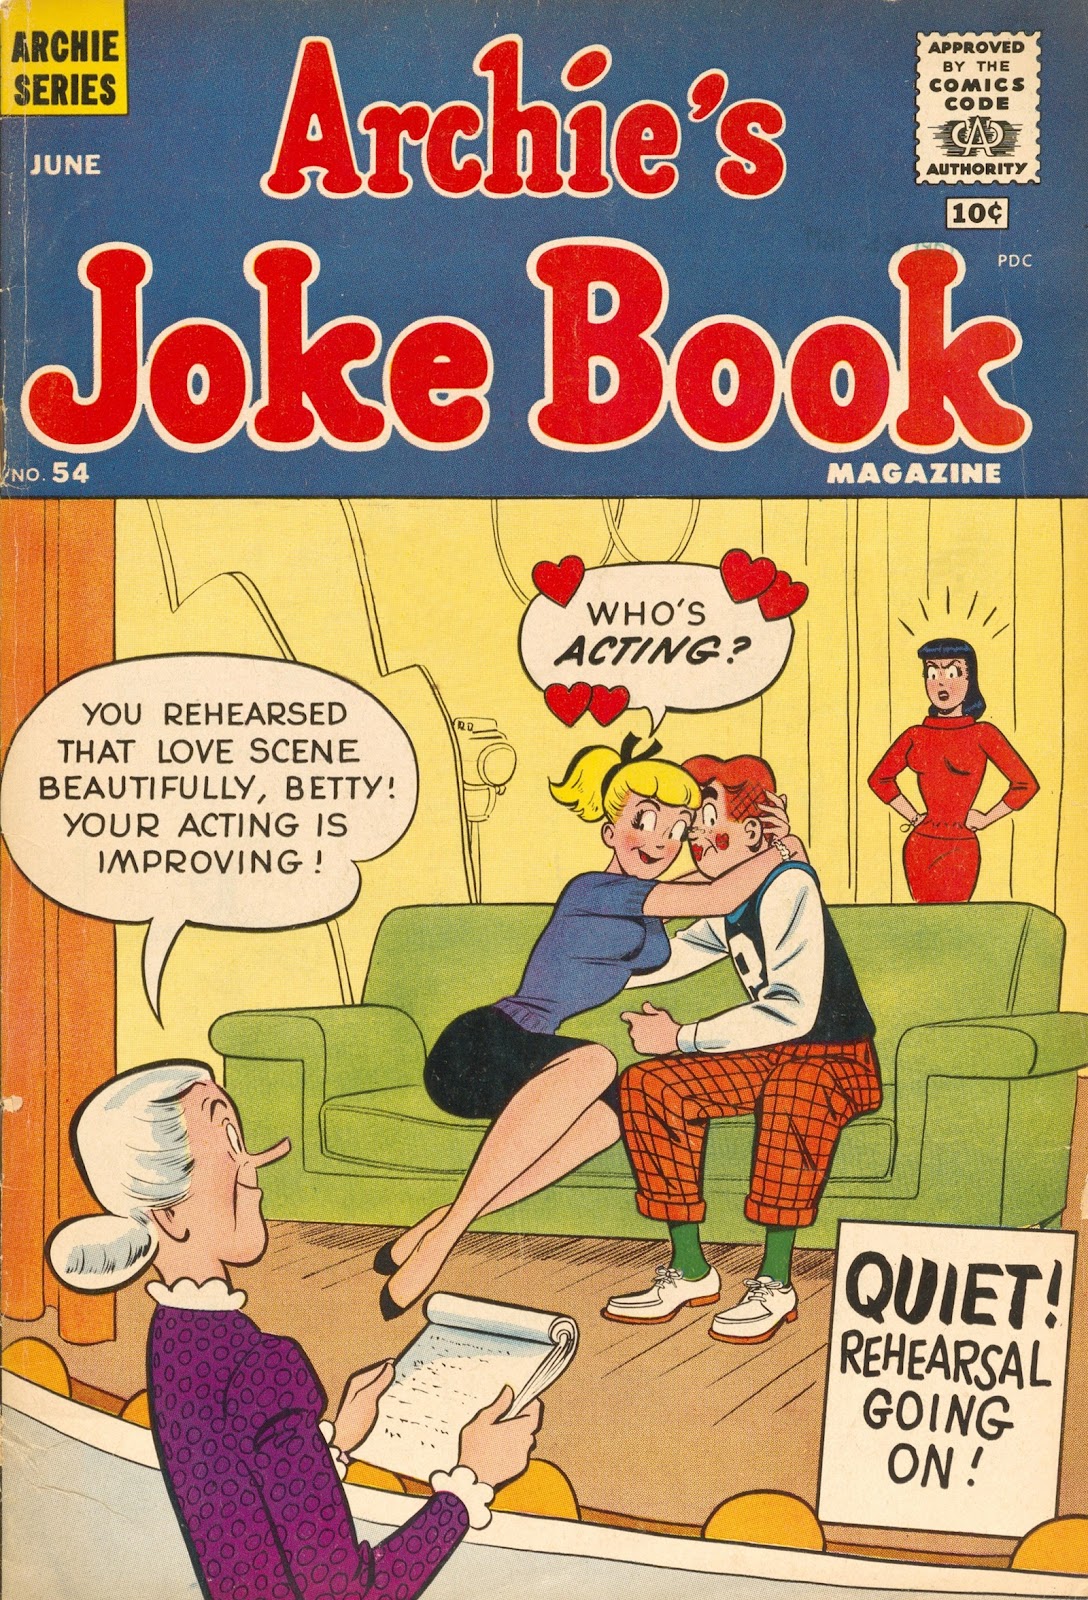 Archie's Joke Book Magazine issue 54 - Page 1